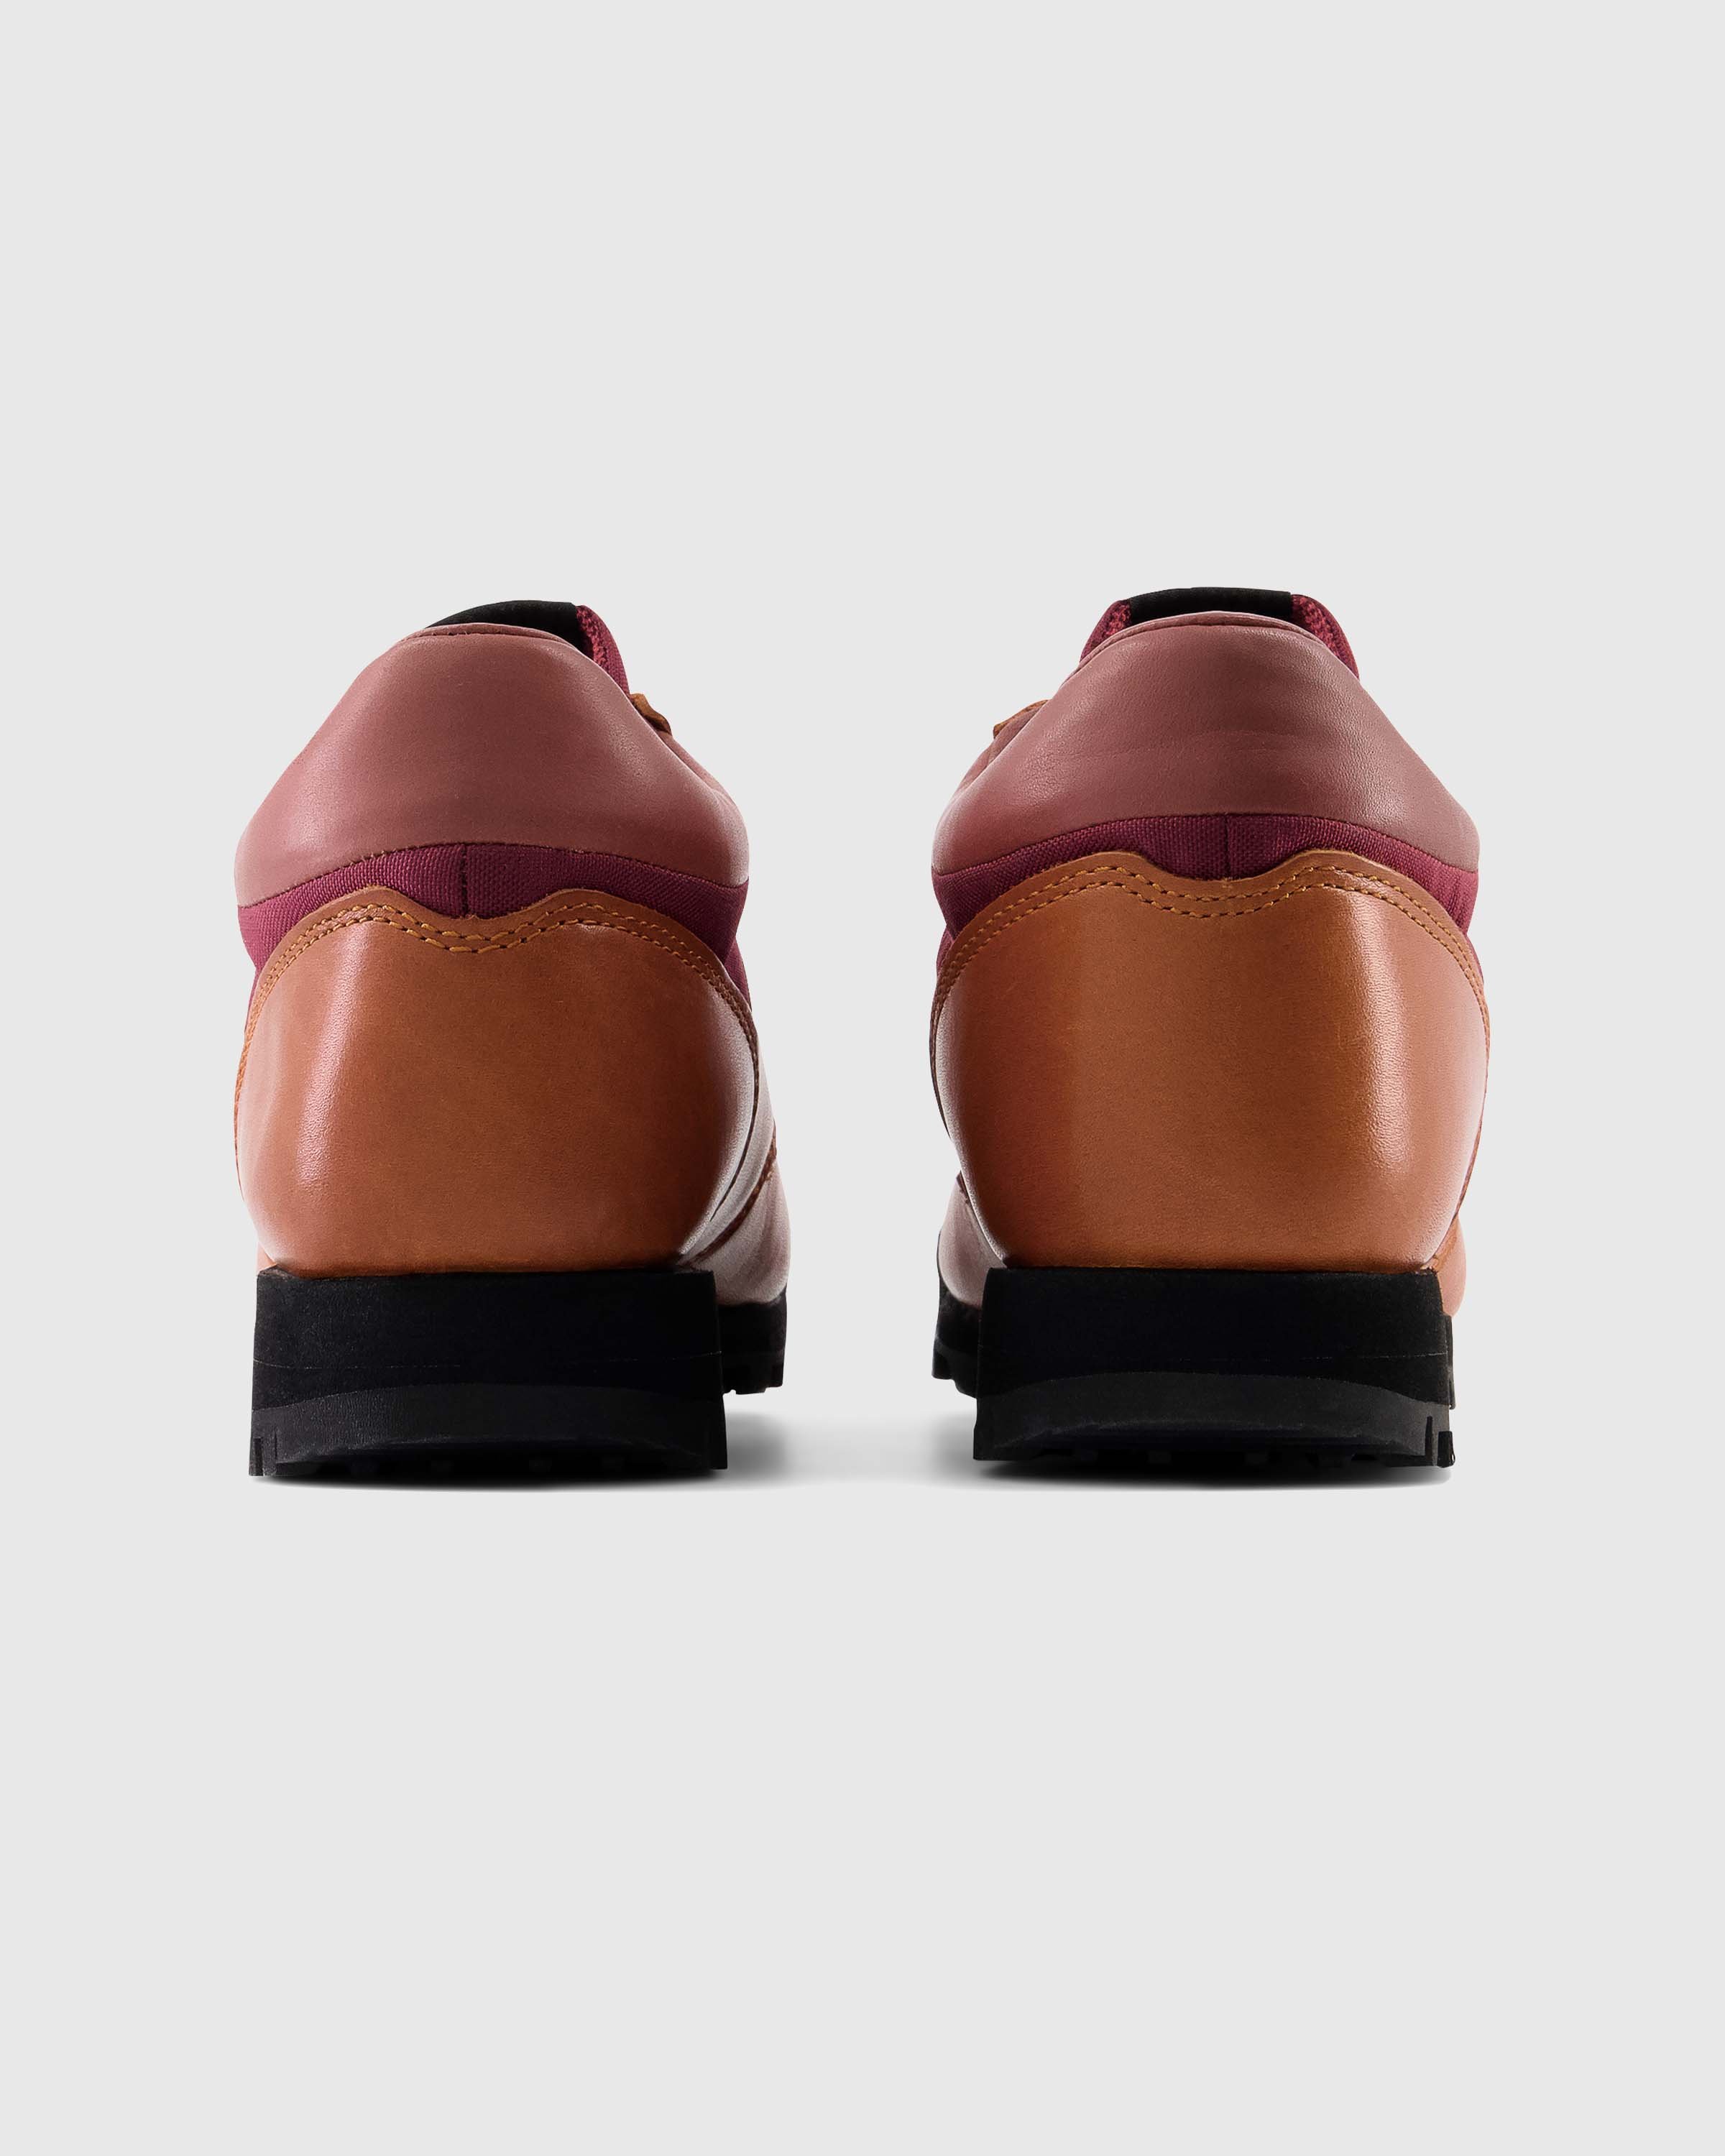 New Balance - UALGSOG Tan - Footwear - Brown - Image 5